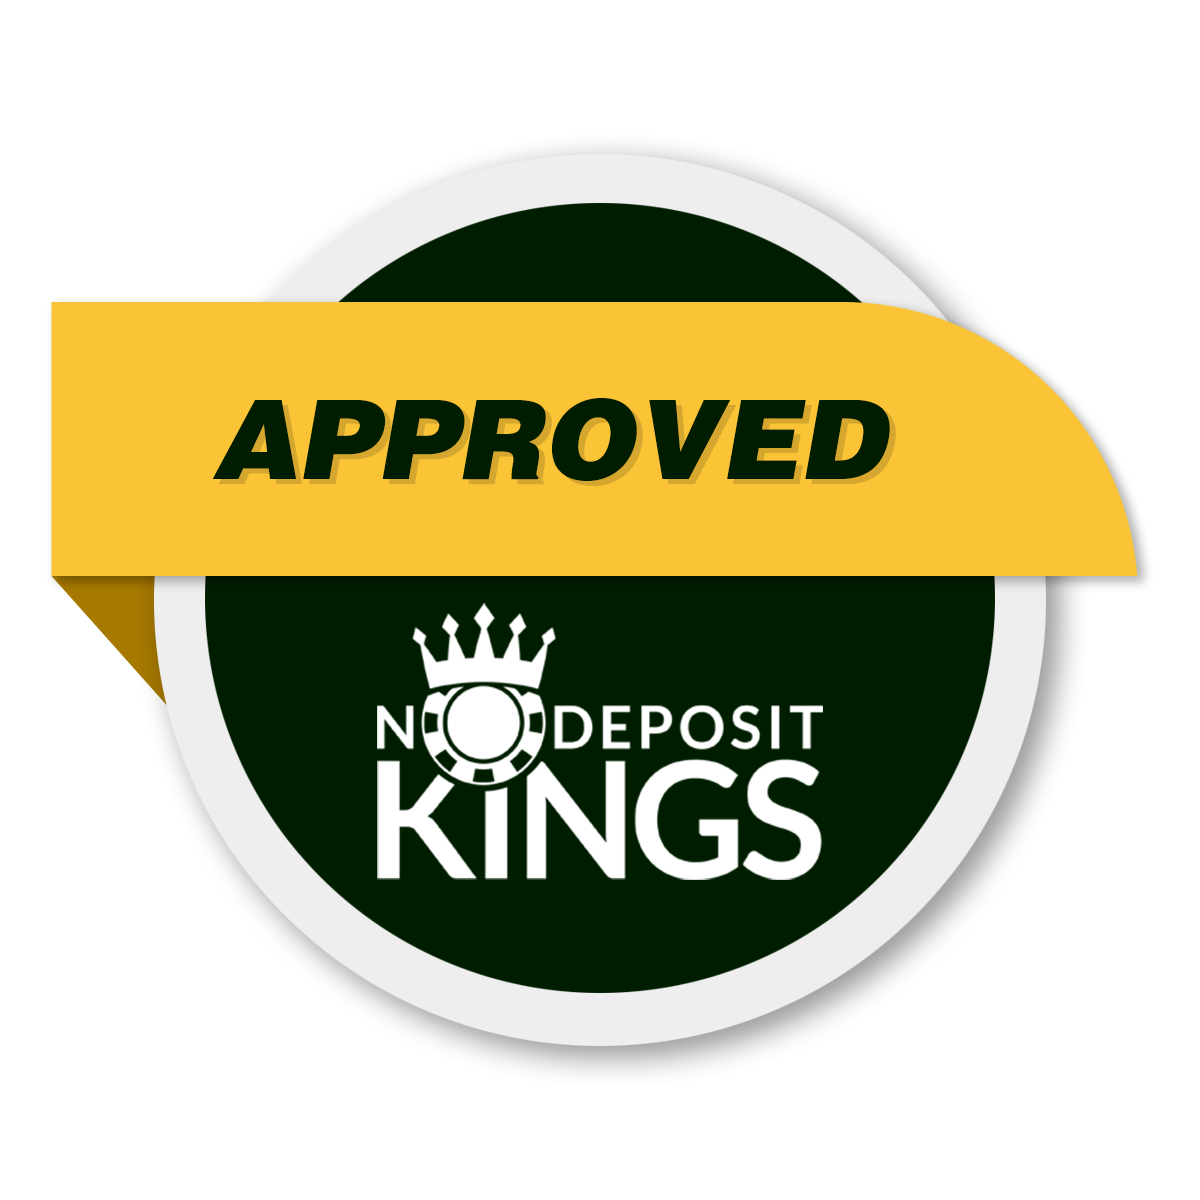 No Deposit Kings Approved